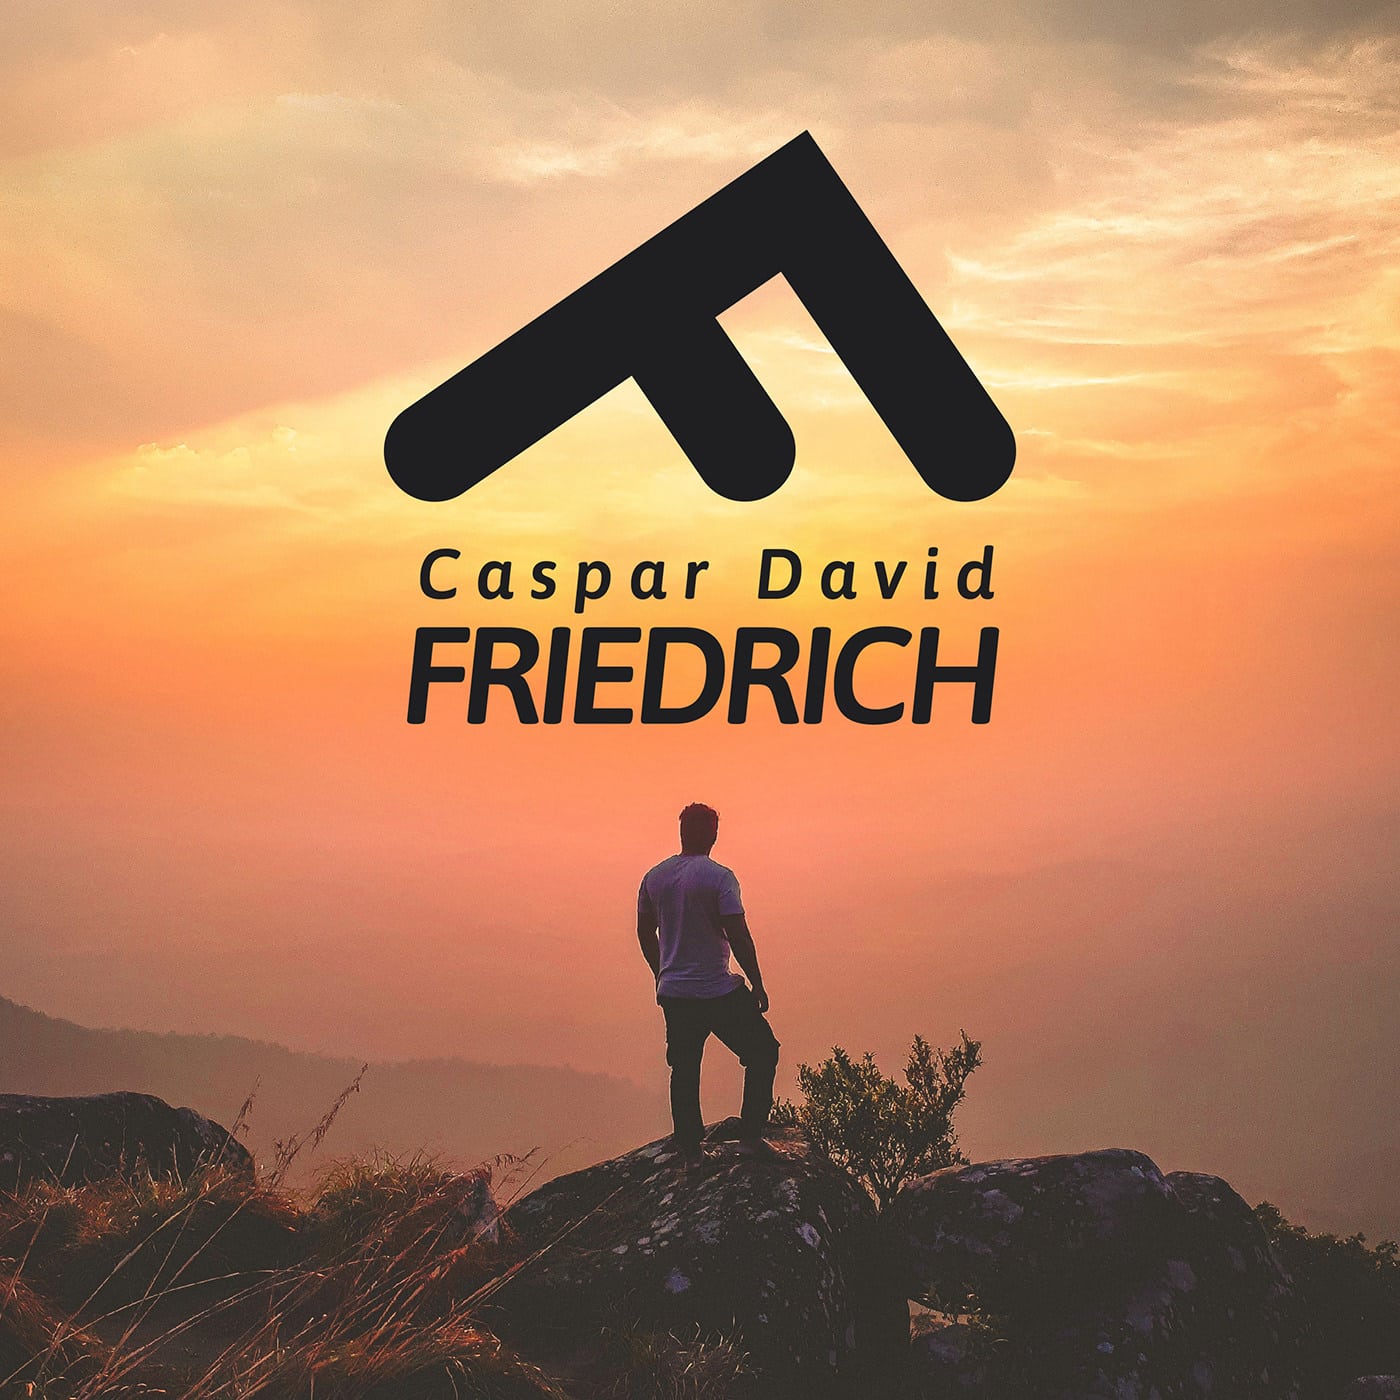 Caspar David Friedrich logo